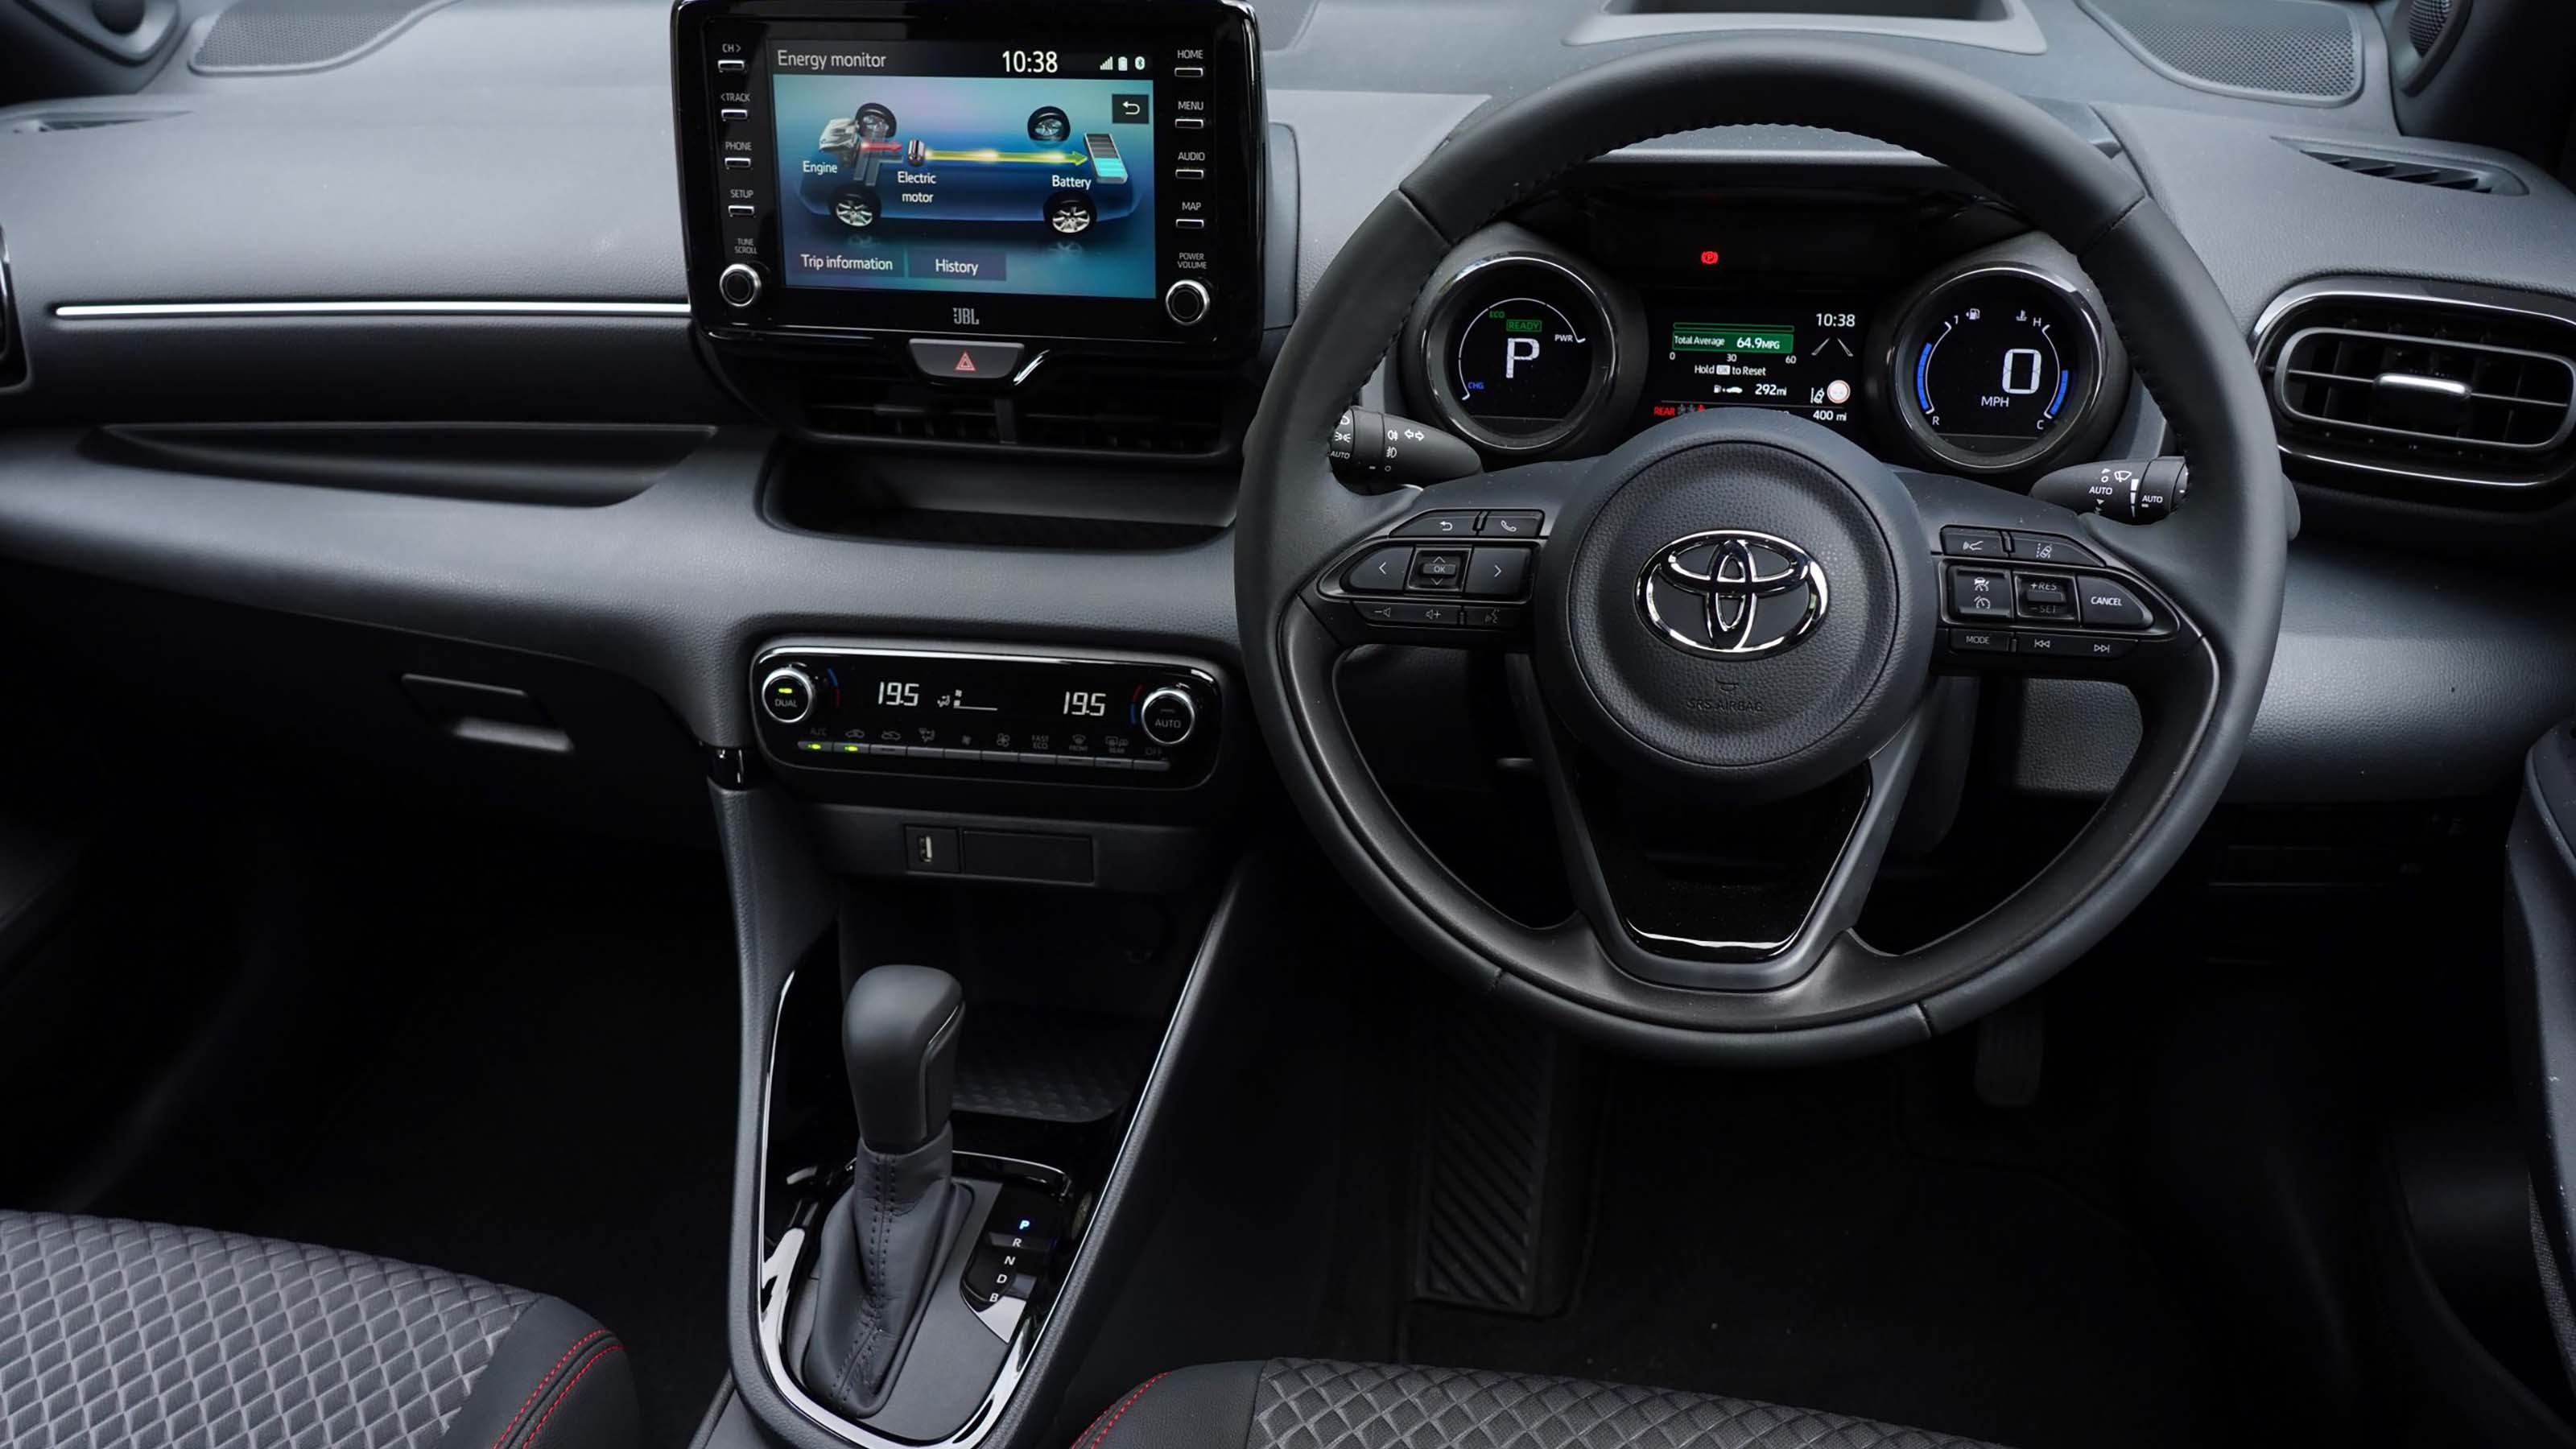 Shetland Middelen protest Toyota Yaris Hybrid interior, dashboard & comfort | DrivingElectric